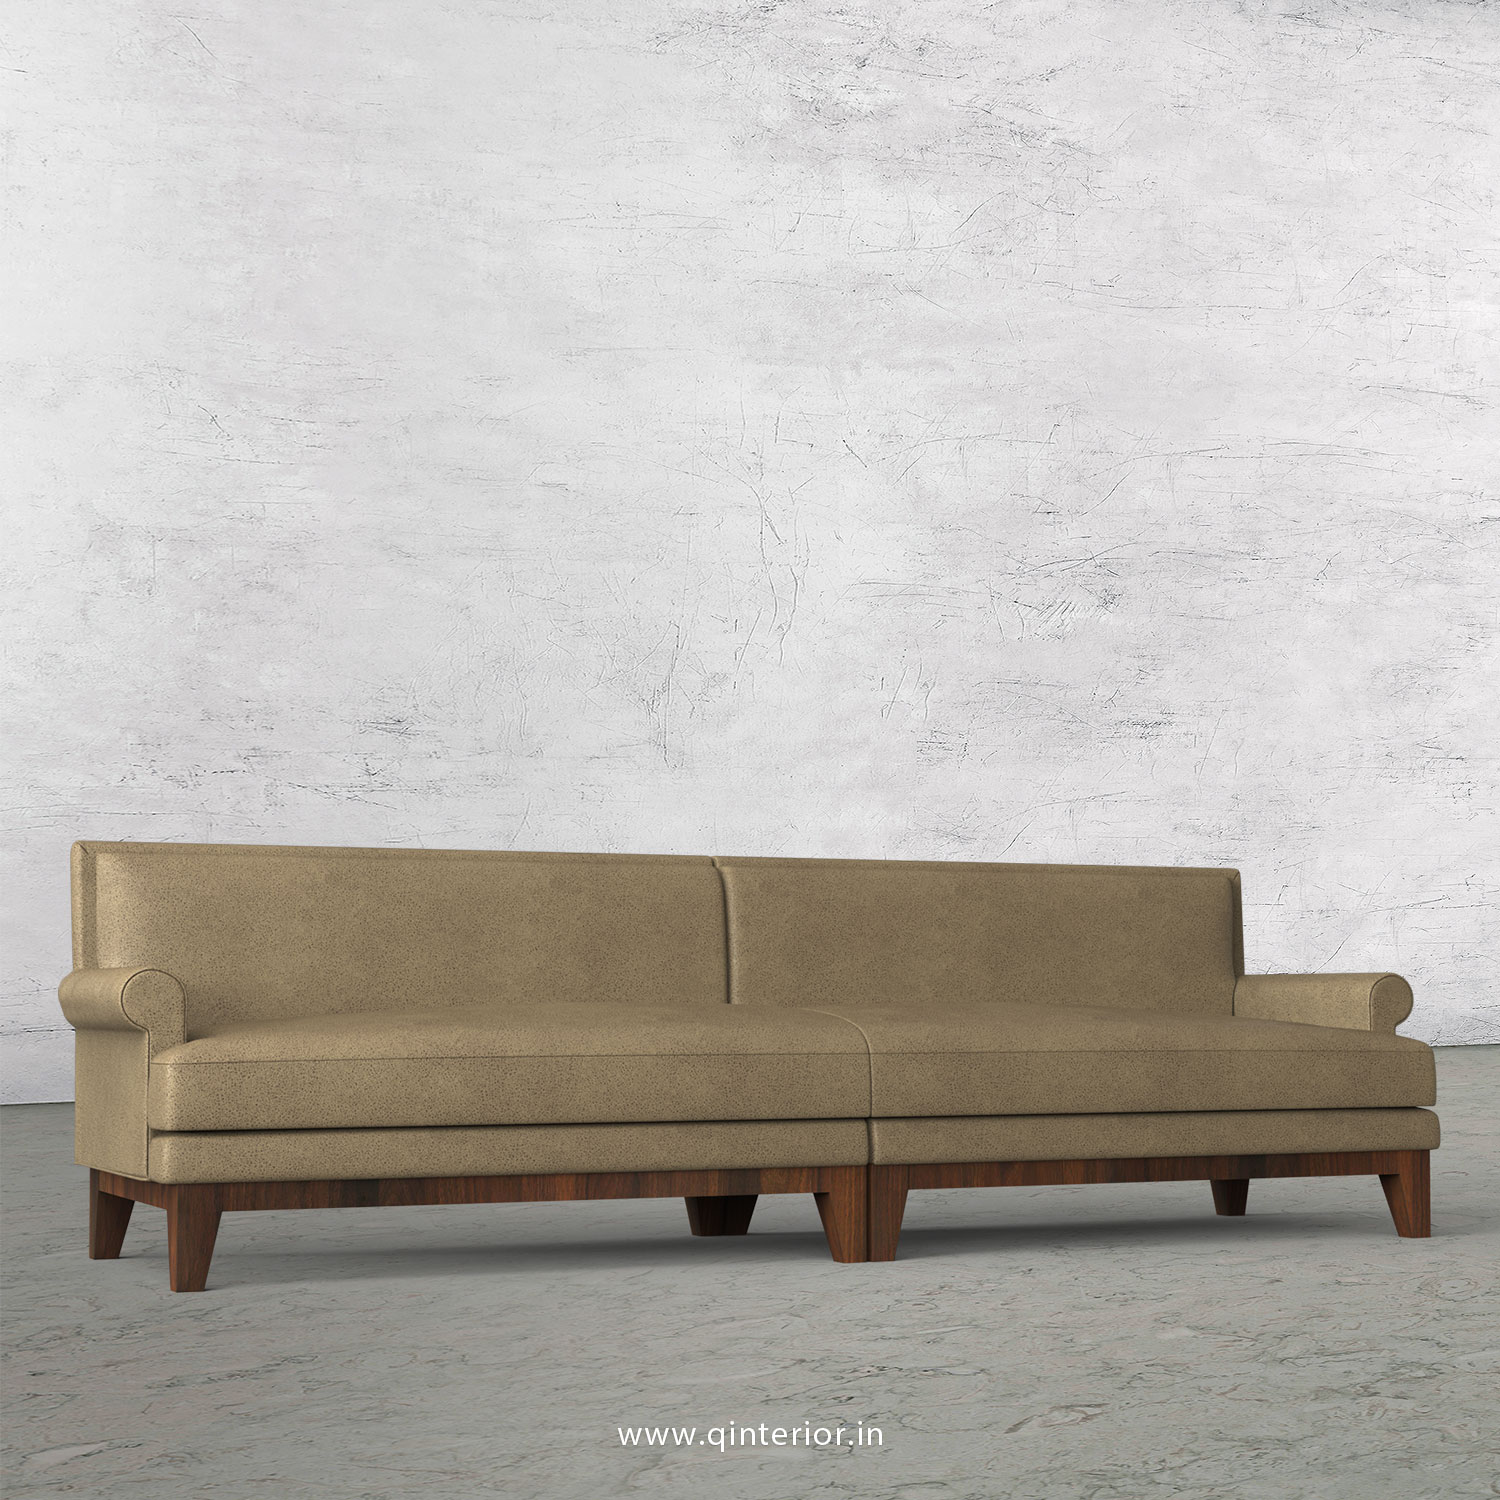 Aviana 4 Seater Sofa in Fab Leather Fabric - SFA001 FL06